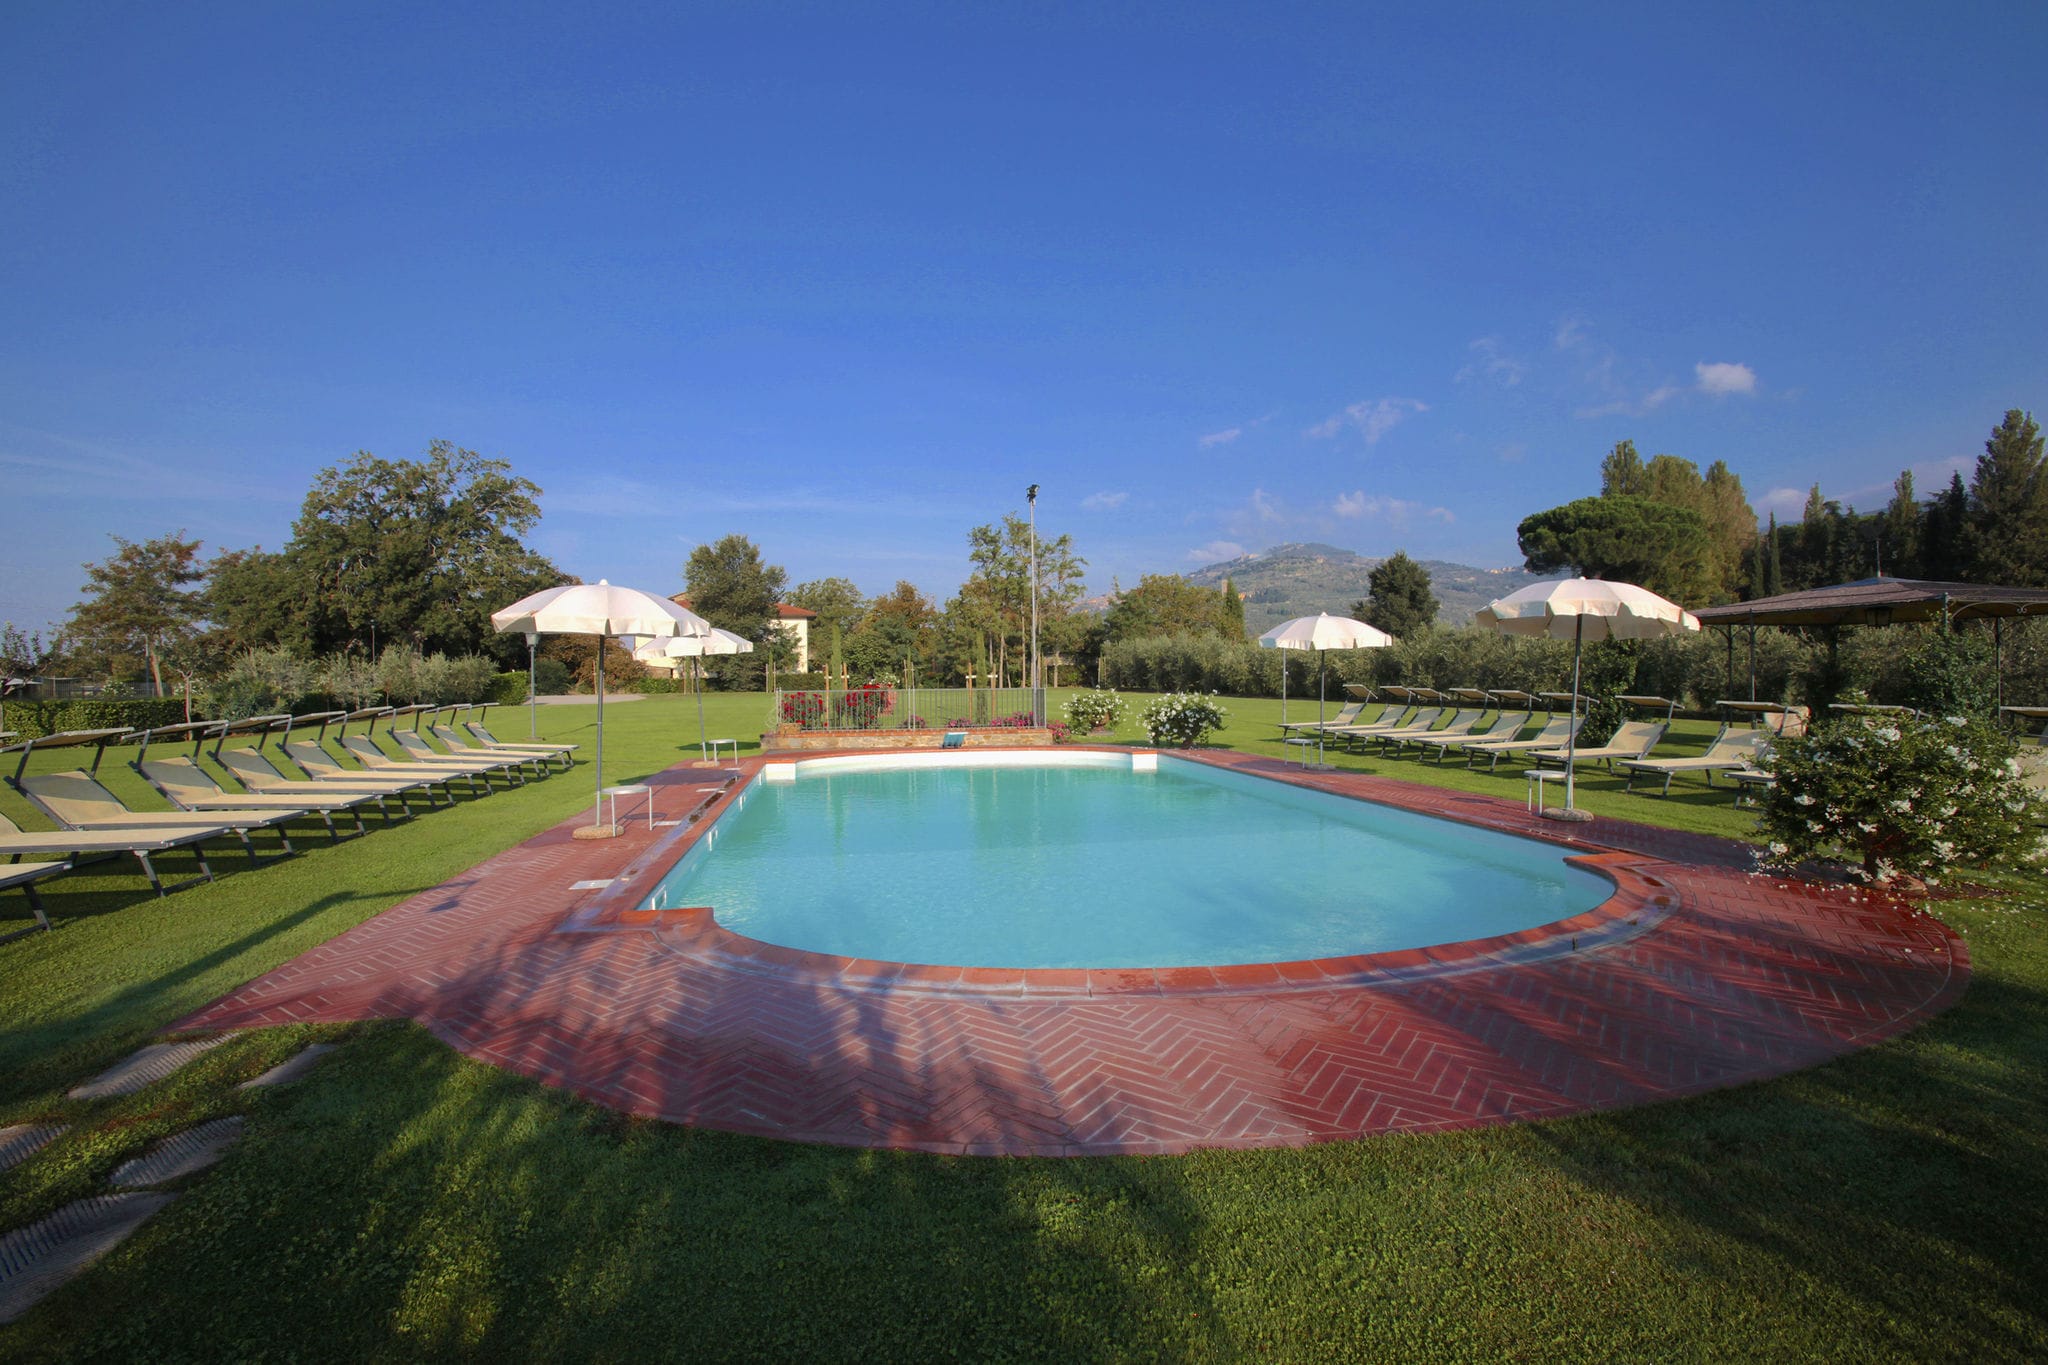 Geräumige Ferienwohnung mit Swimmingpool in Cortona, Toskana